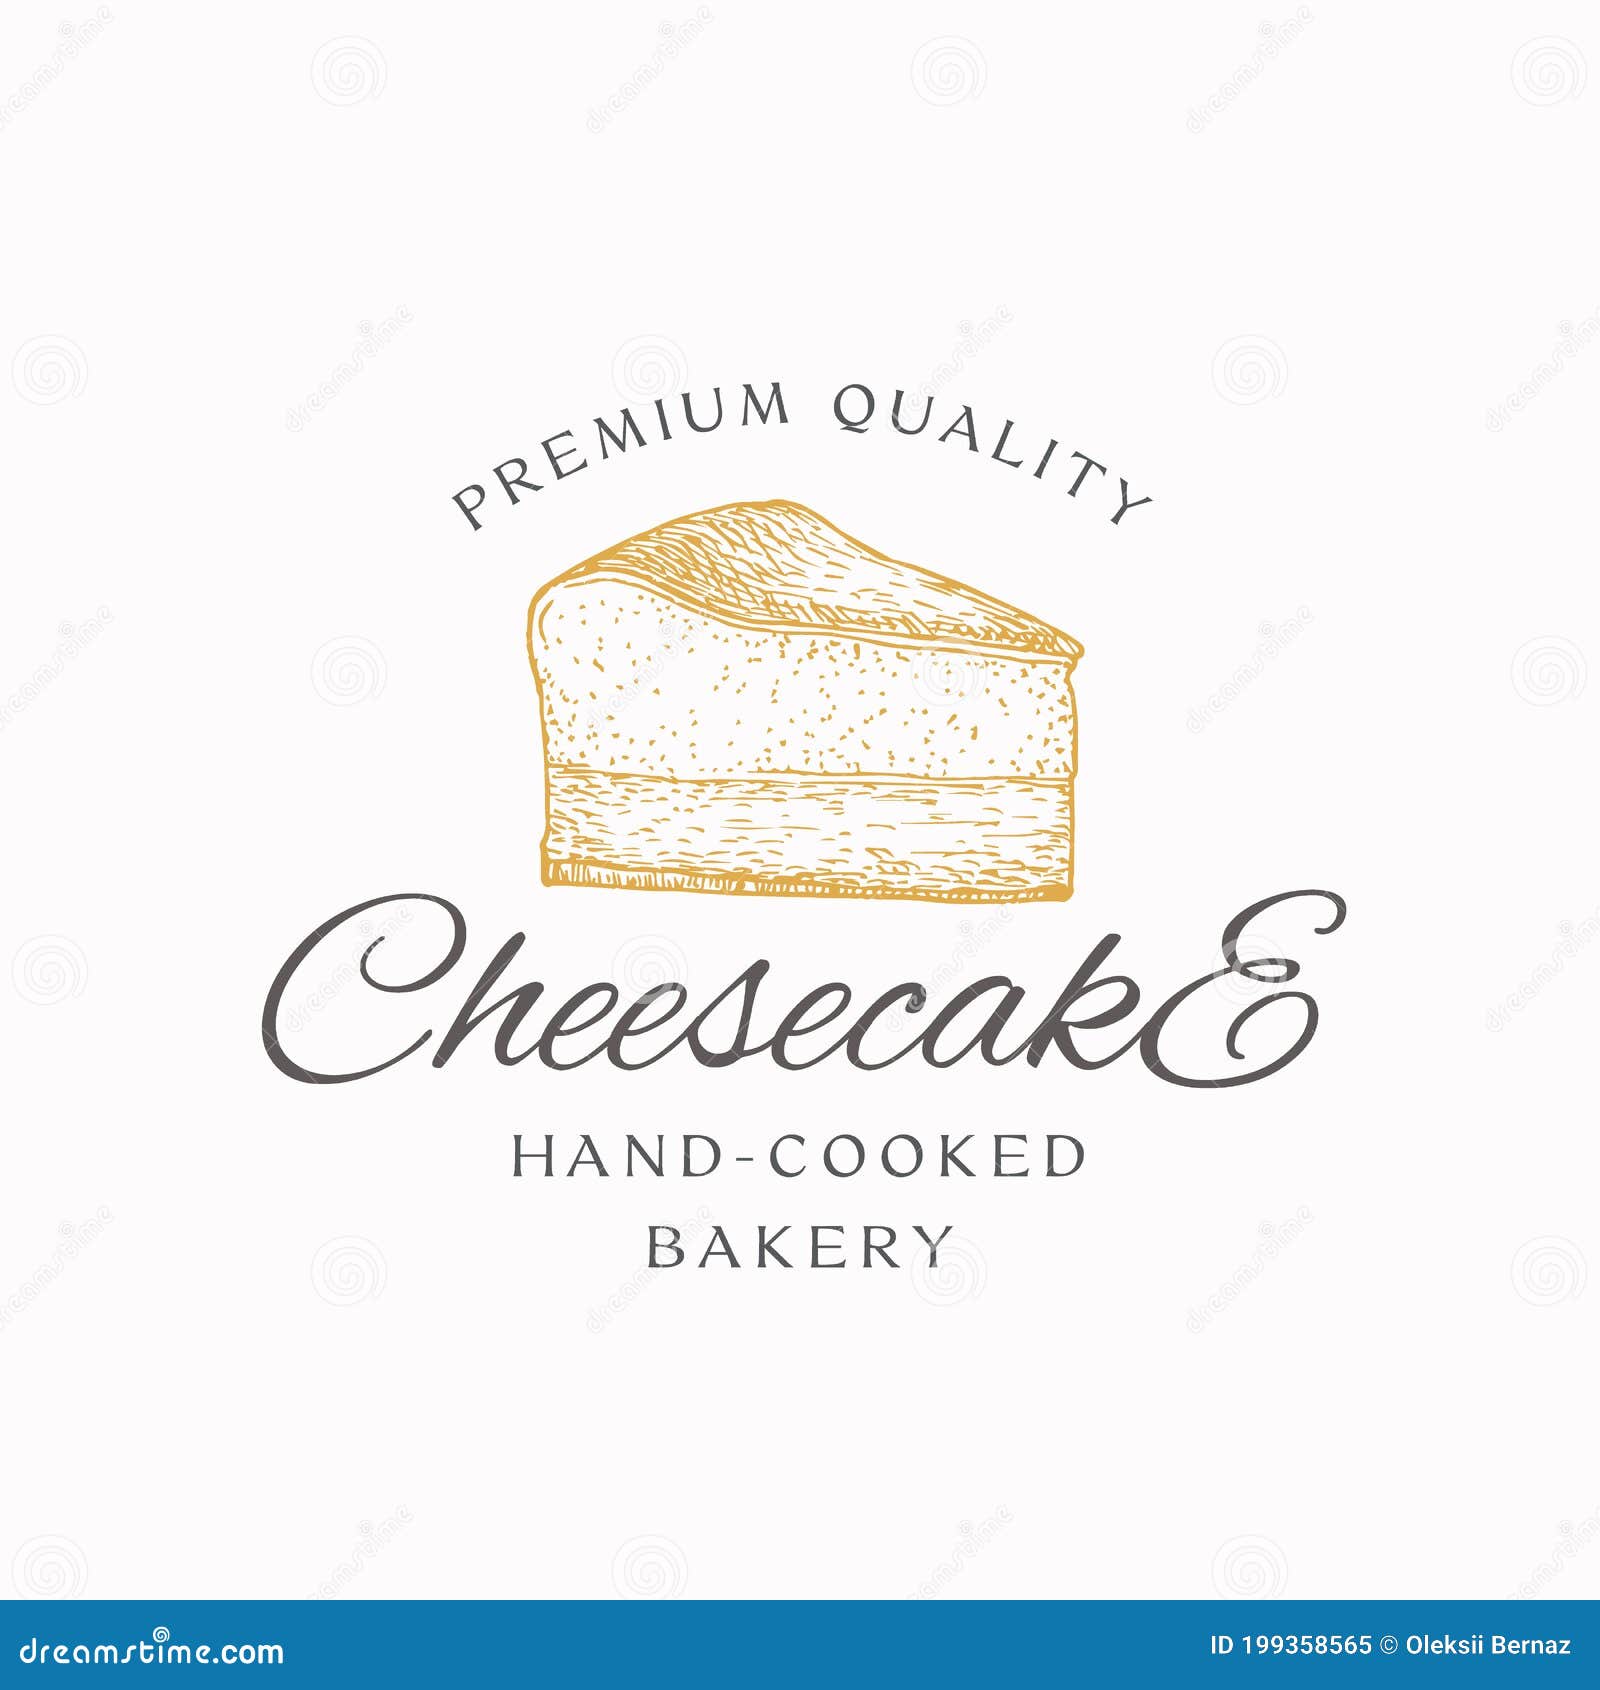 cheesecake logo ideas 4